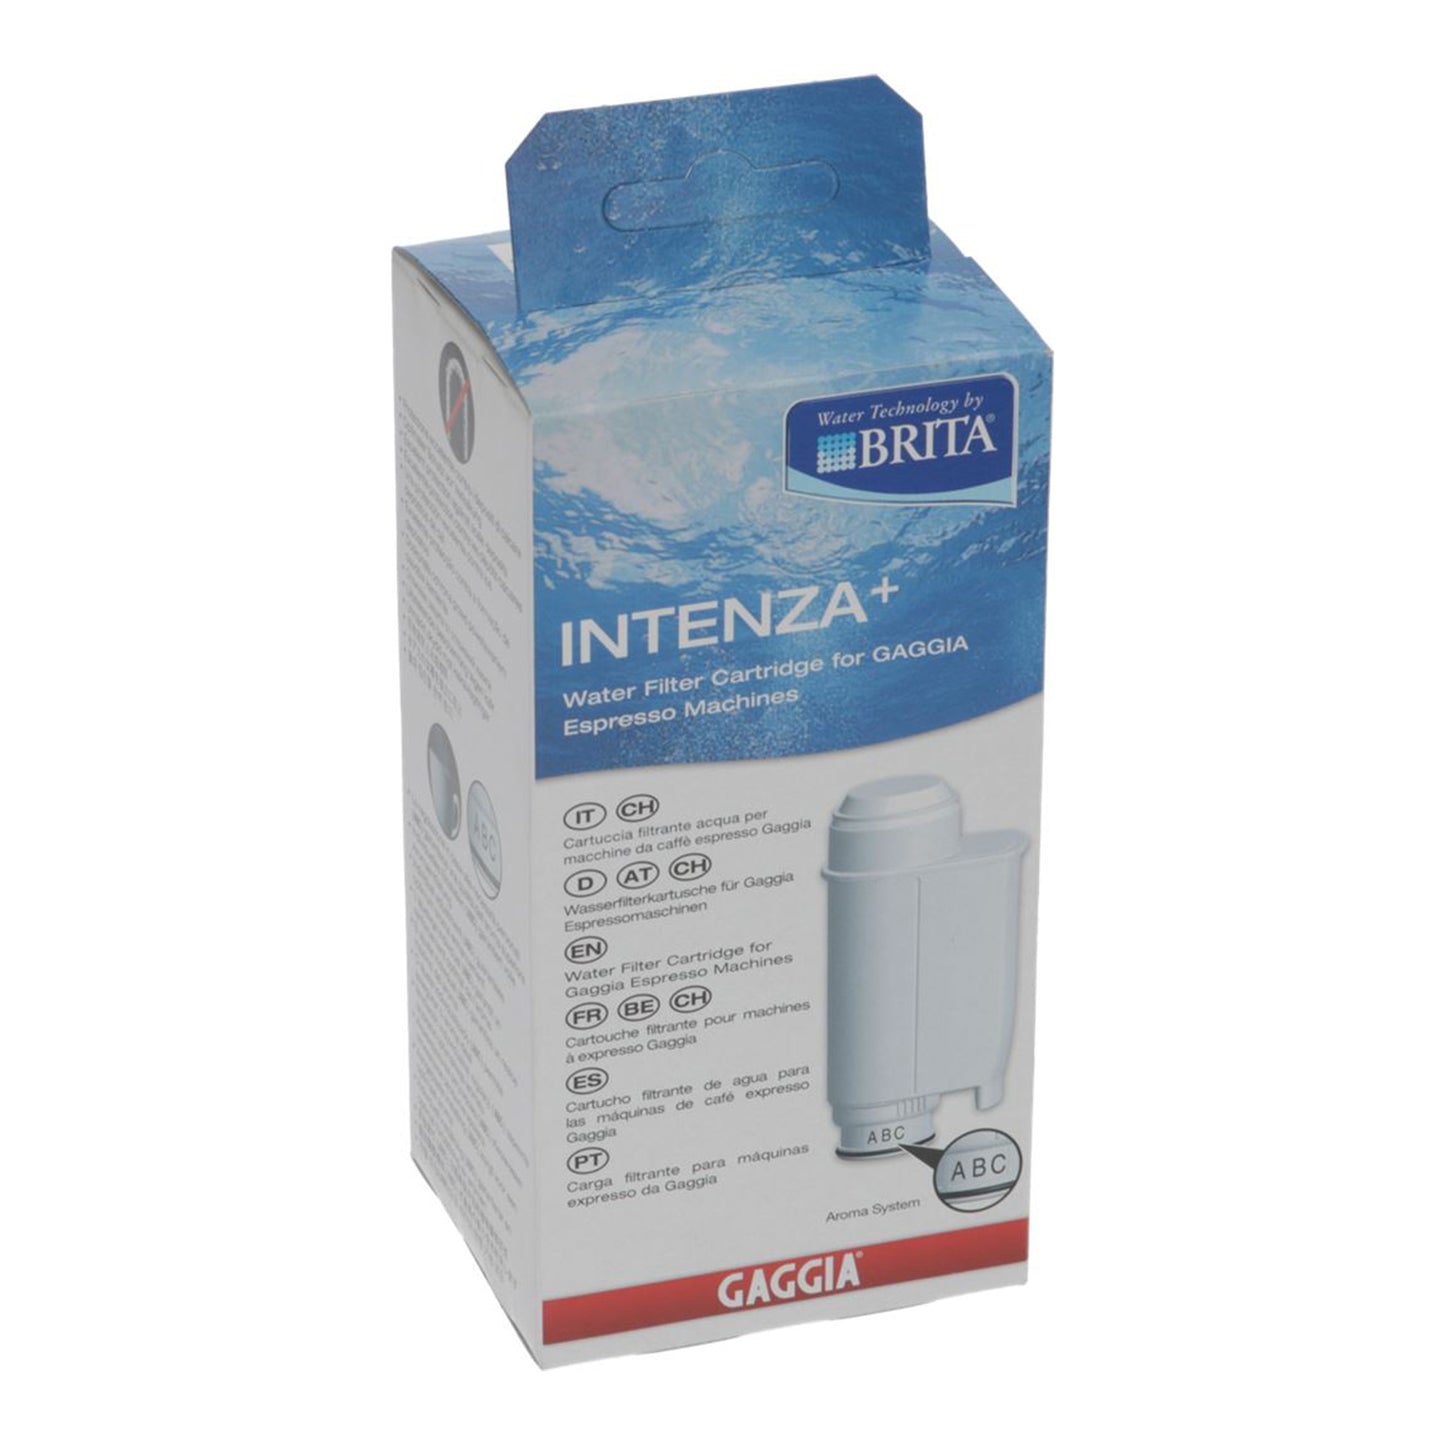 Brita INTENZA+, Water filter for gaggia appliances